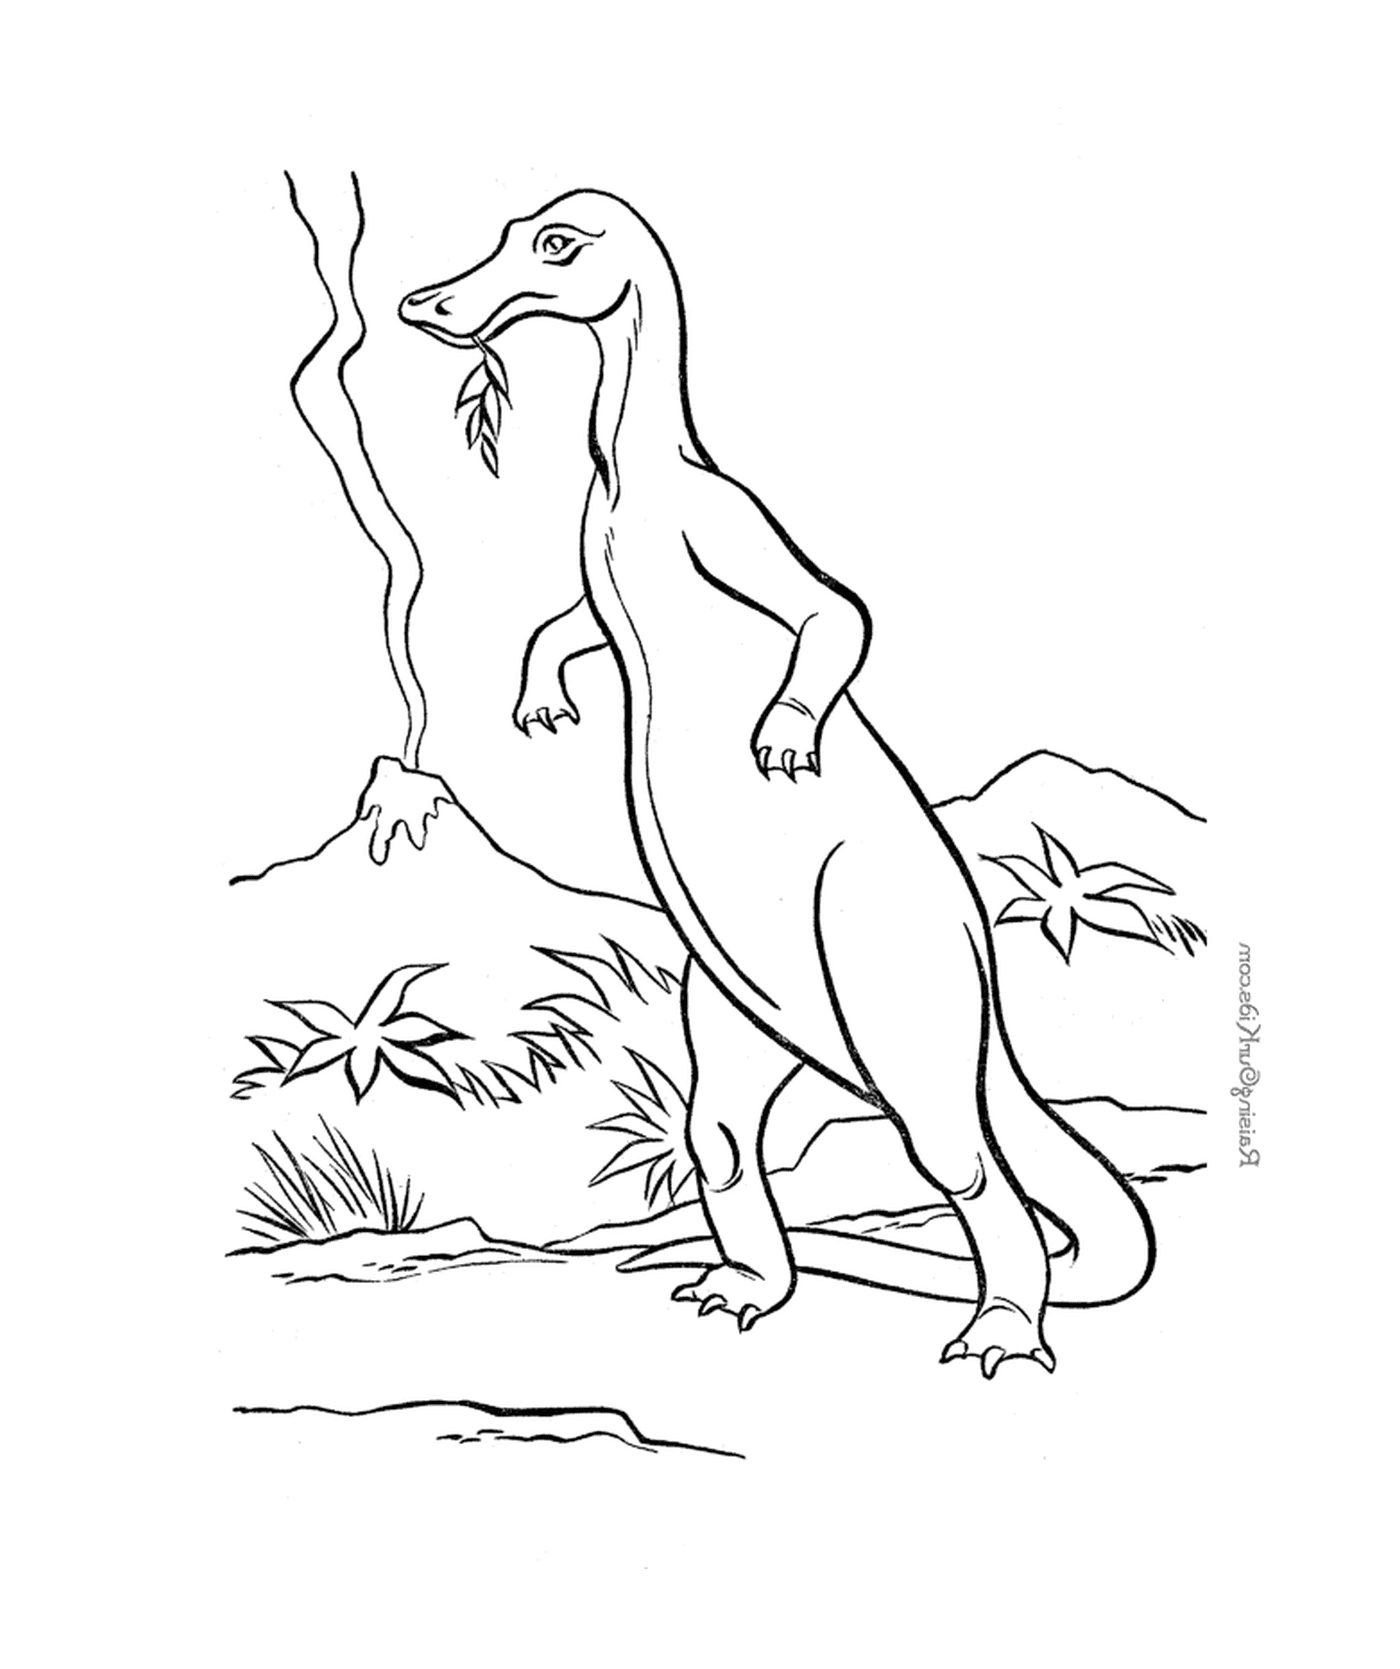  Dinosaur standing in the green grass 